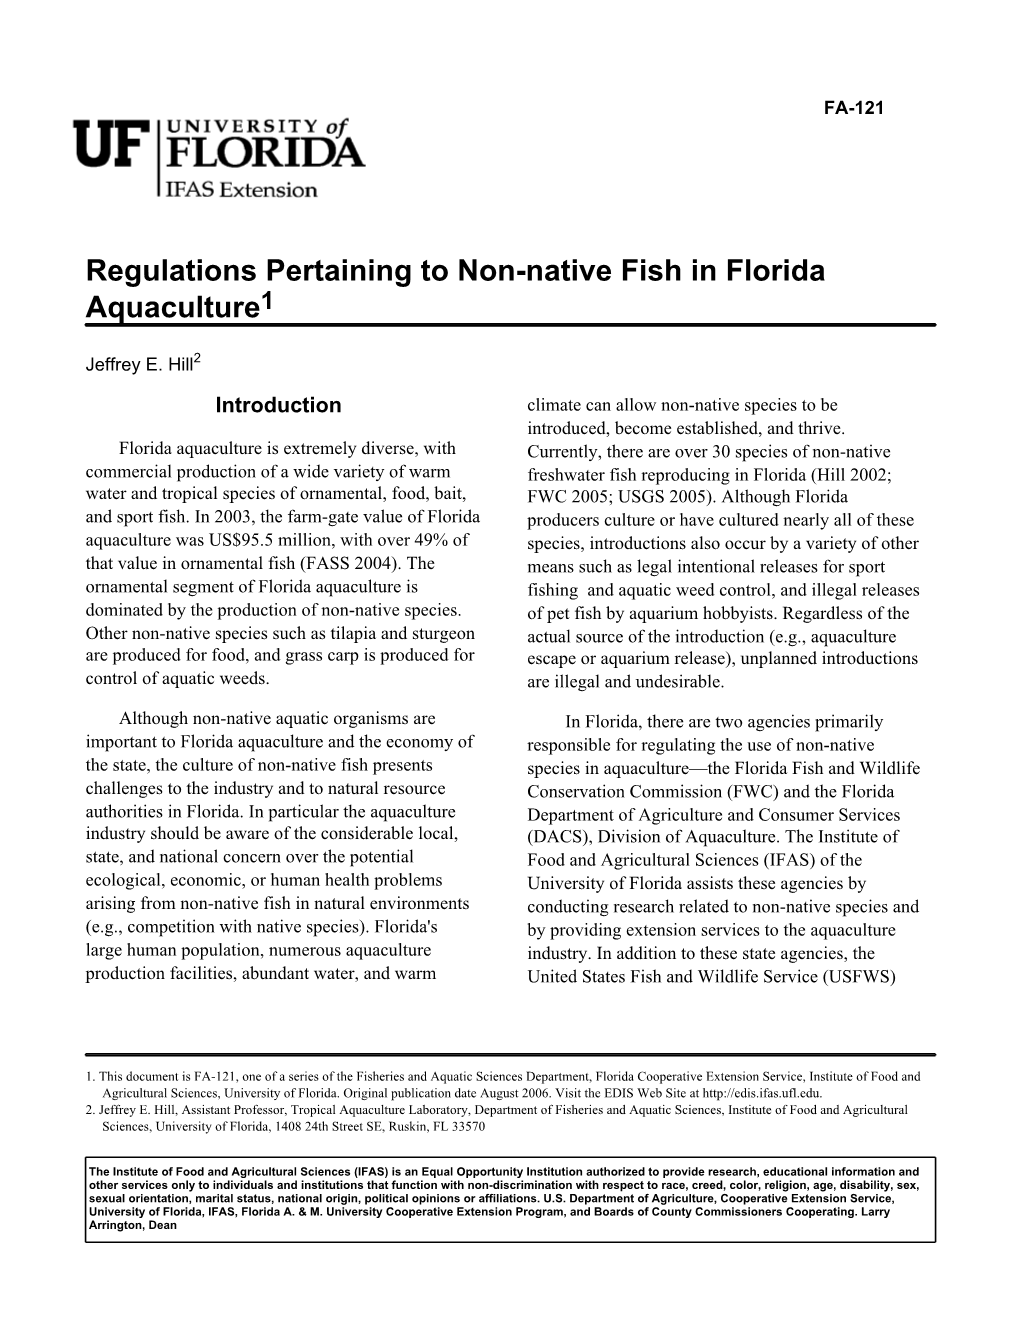 Regulations Pertaining to Non-Native Fish in Florida Aquaculture1